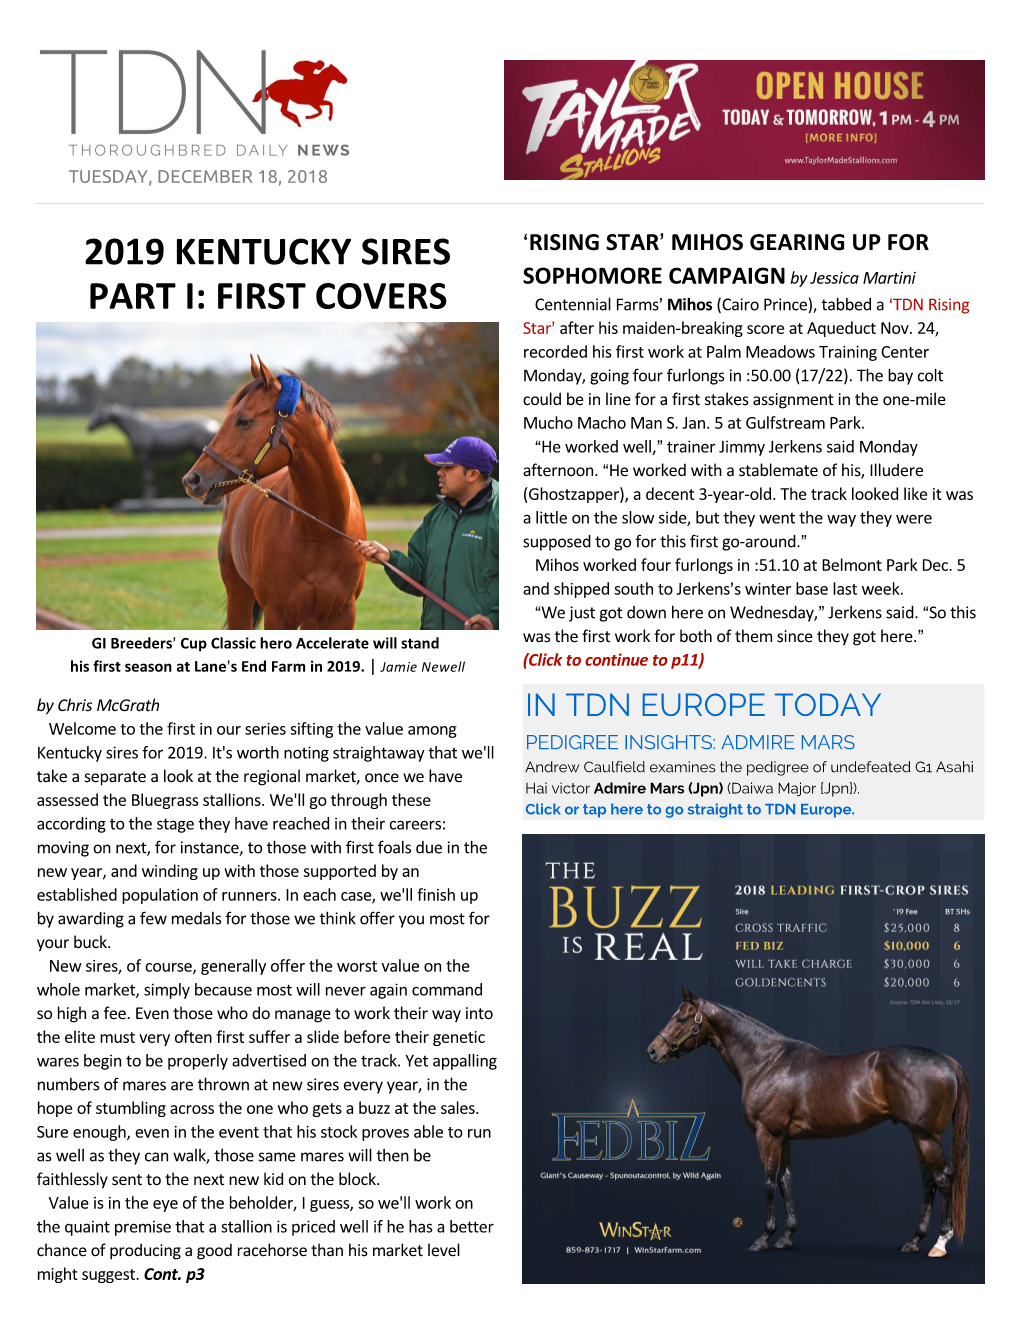 2019 Kentucky Sires Part I